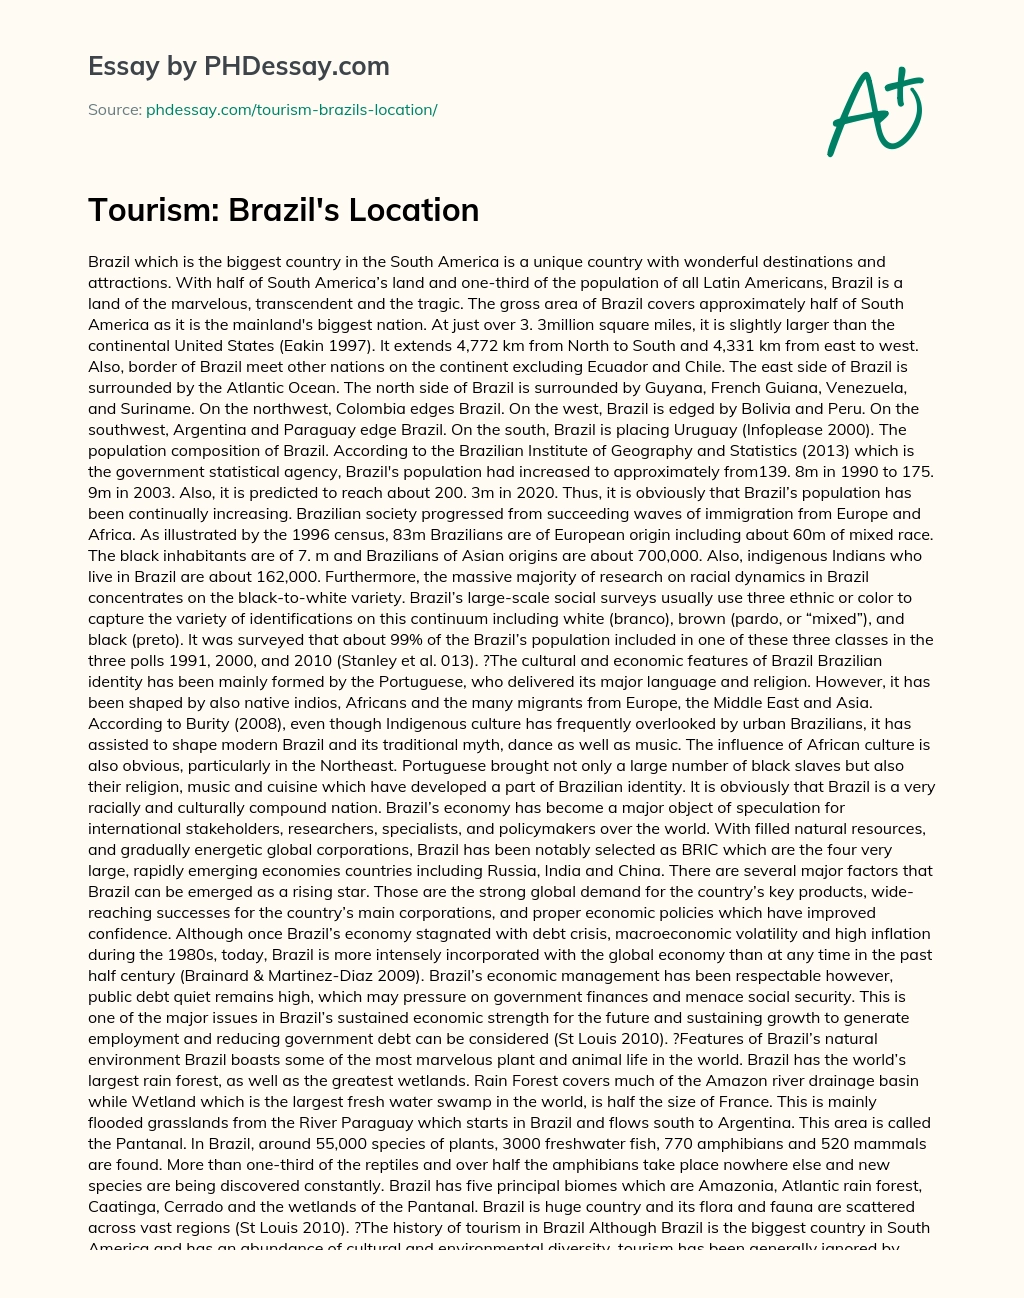 Tourism: Brazil’s Location essay